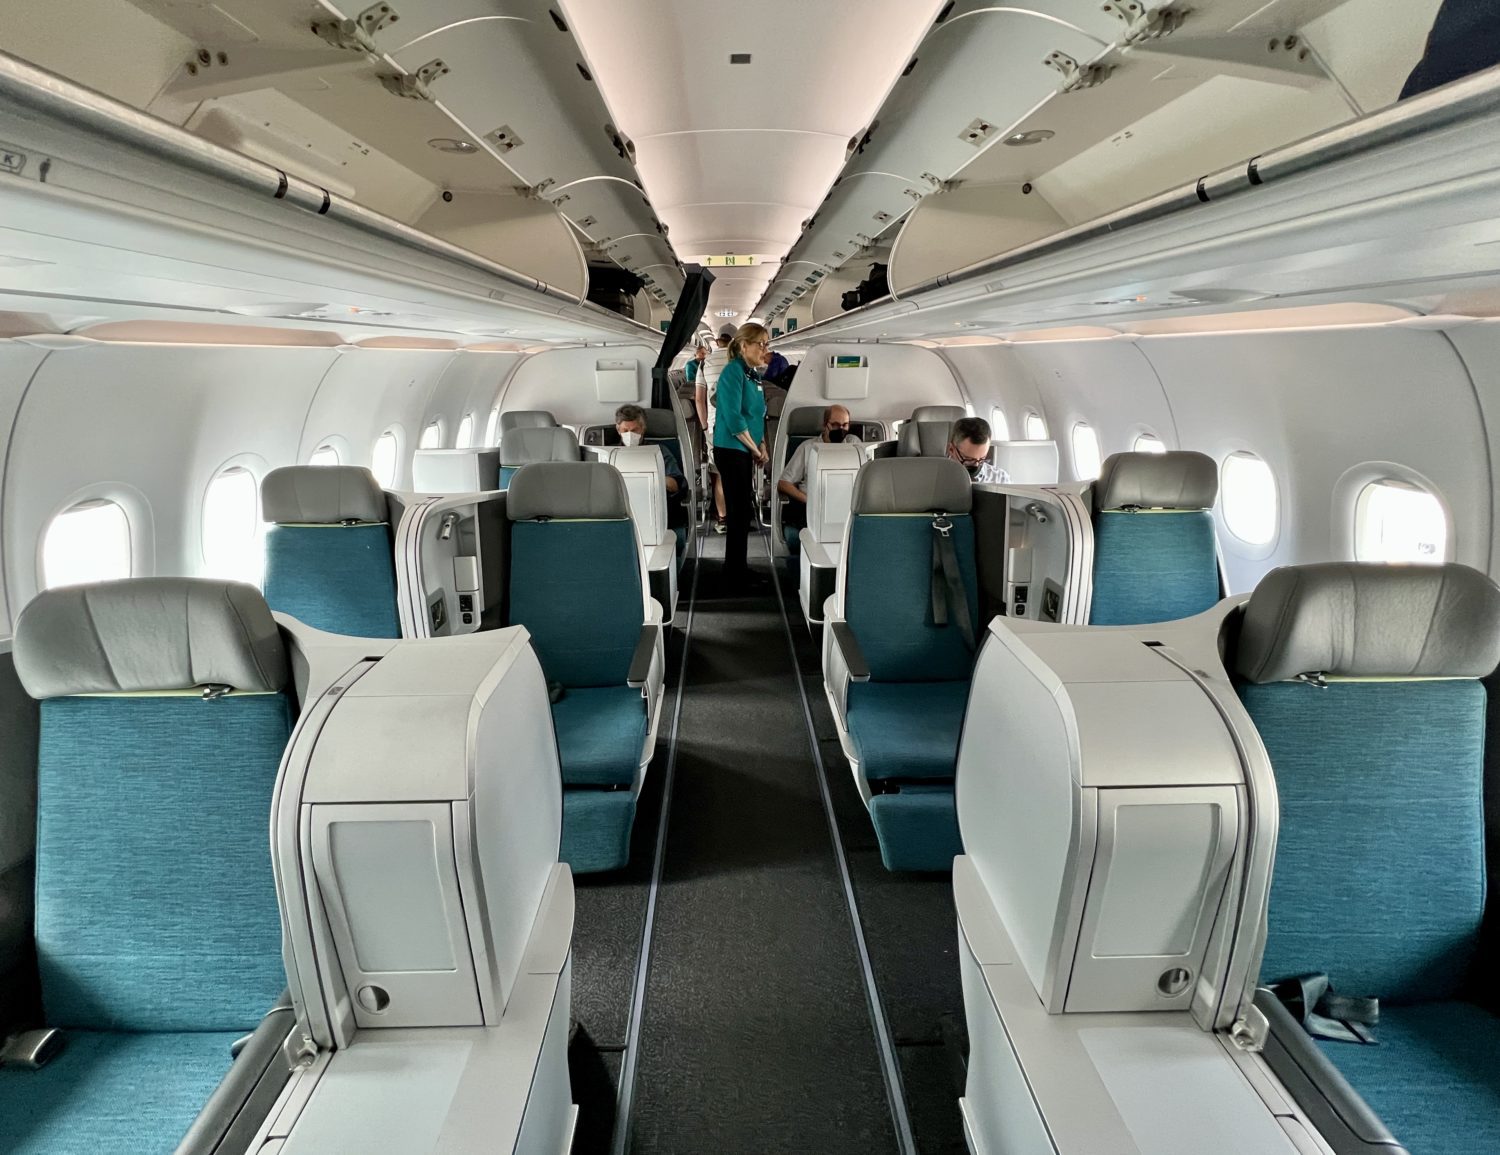 aer lingus business class cabin  Aer Lingus Business Class Review, A321 Dublin to Washington, DC &#8211; Thrifty Traveler Aer Lingus business class cabin scaled